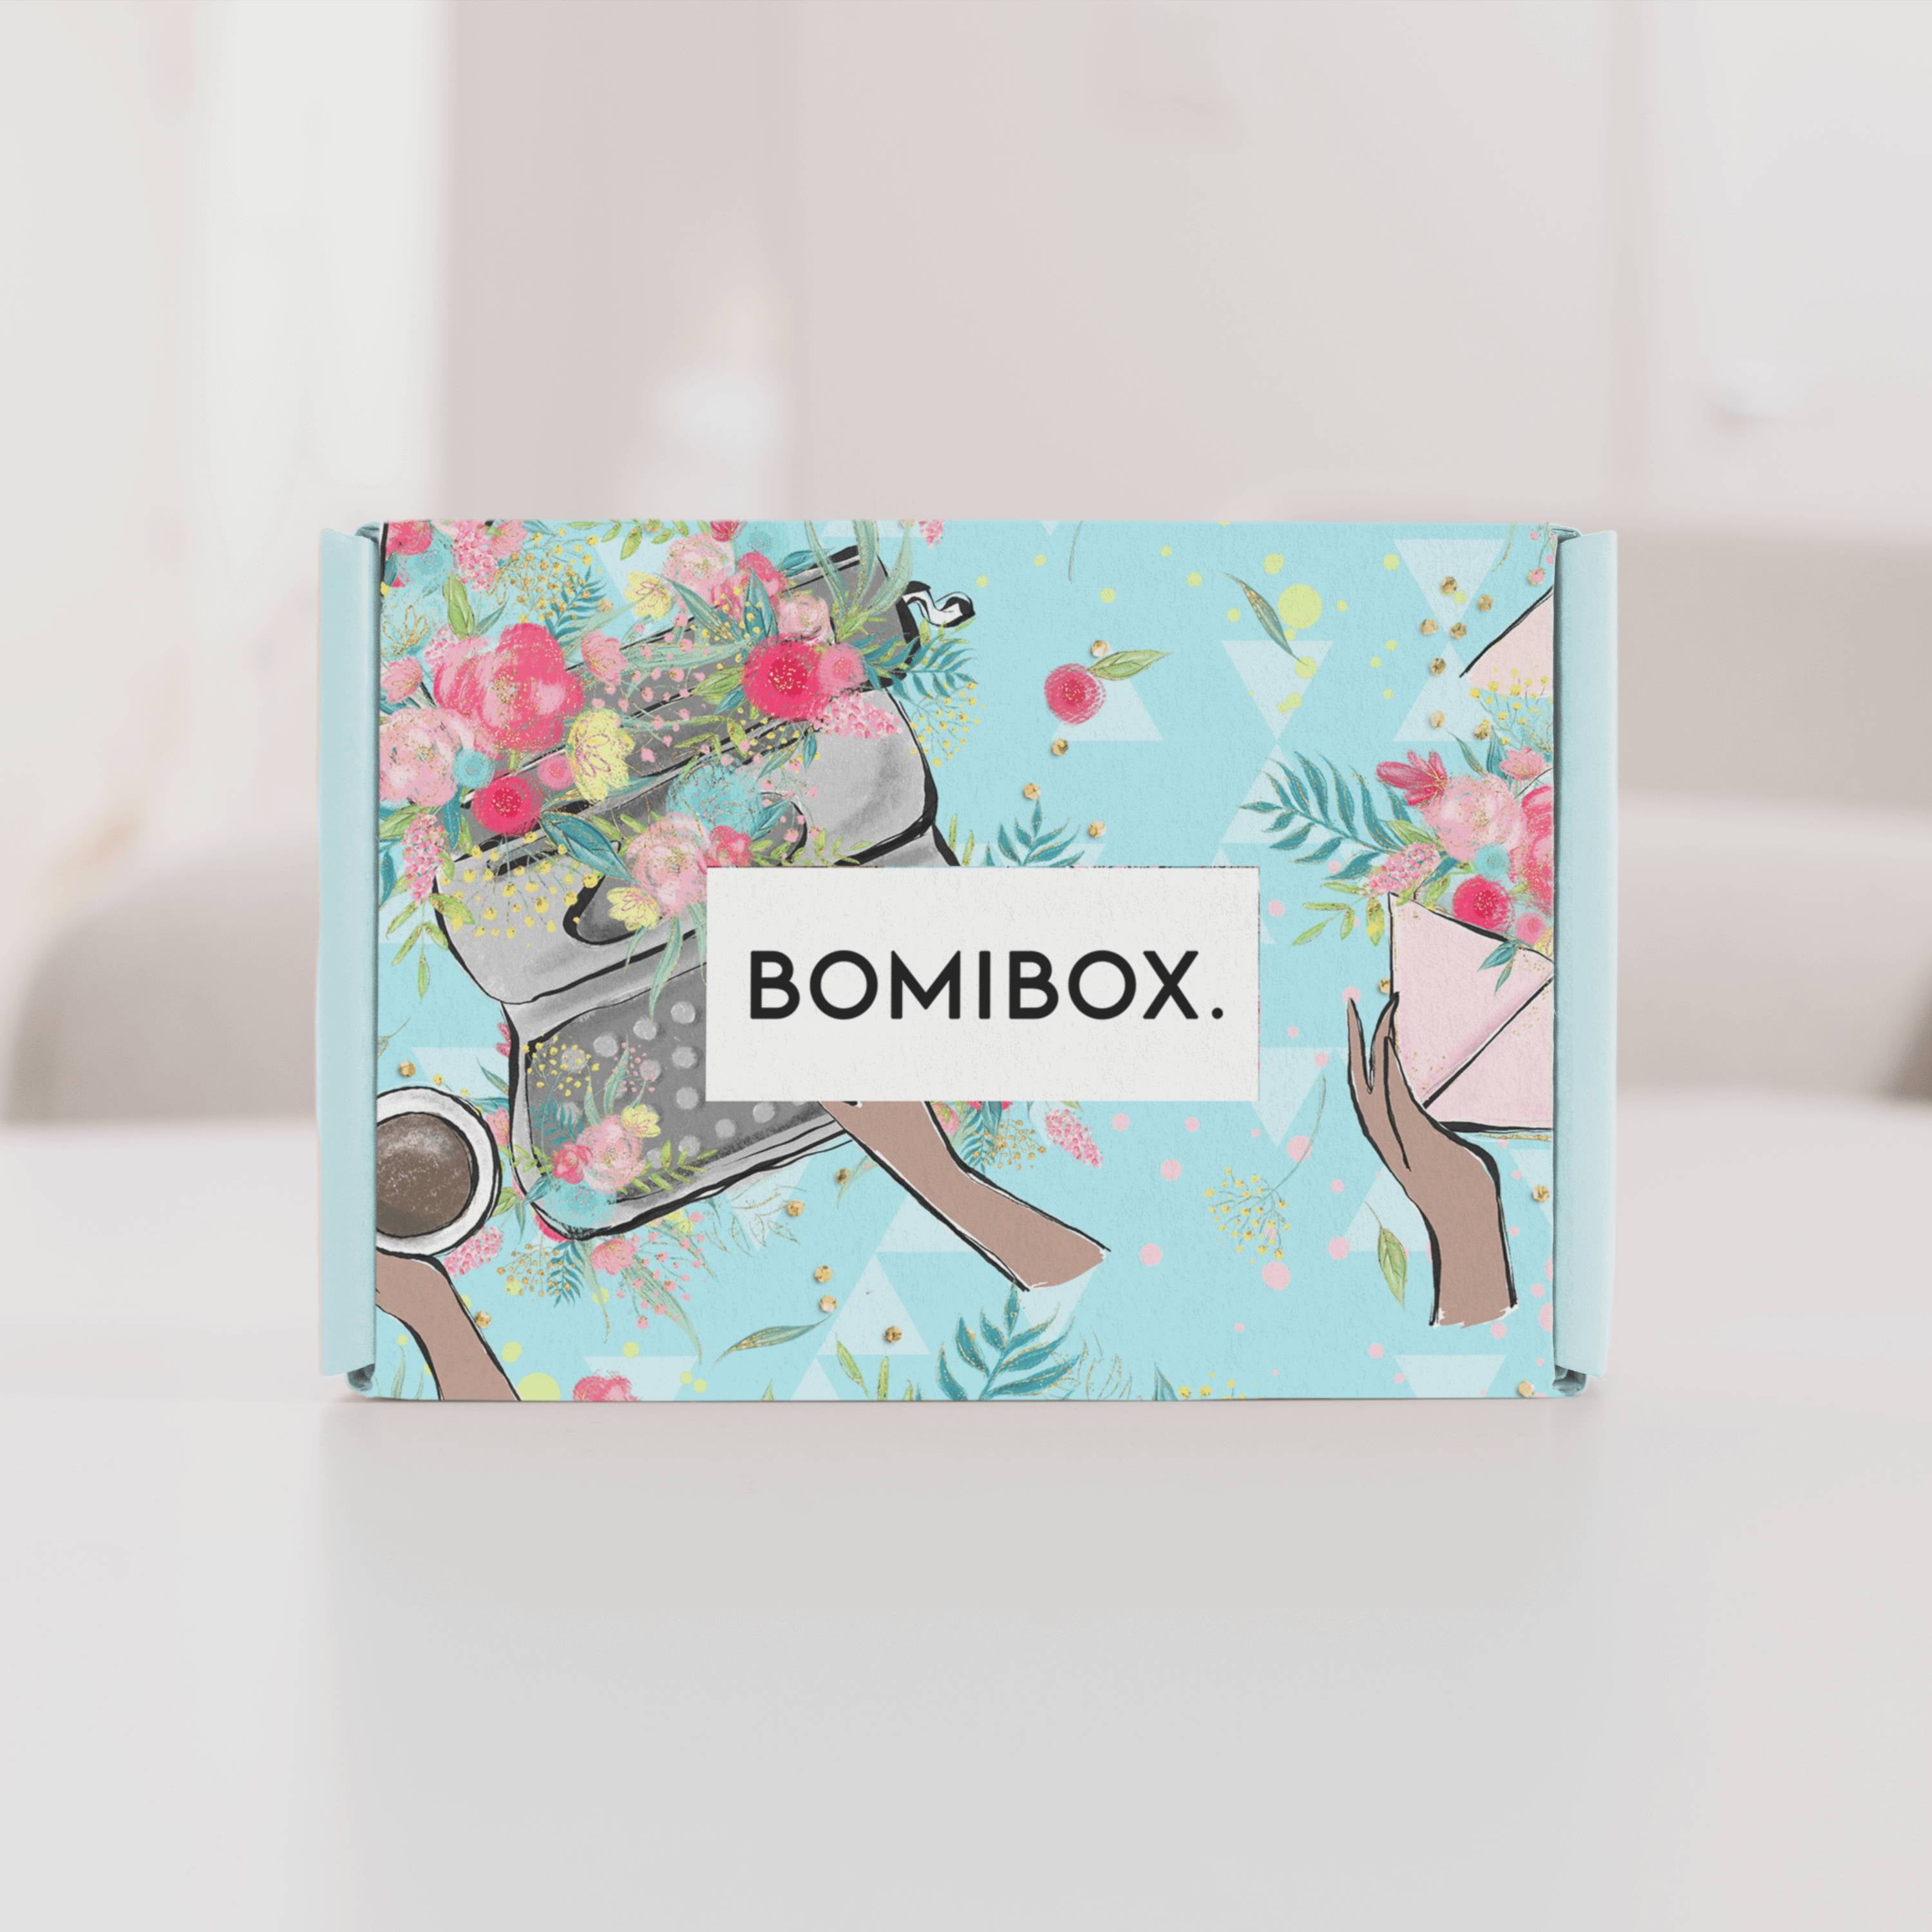 Past Boxes-Bomibox March 2020 - Korean Beauty Box Monthly Korean Skincare Subscription